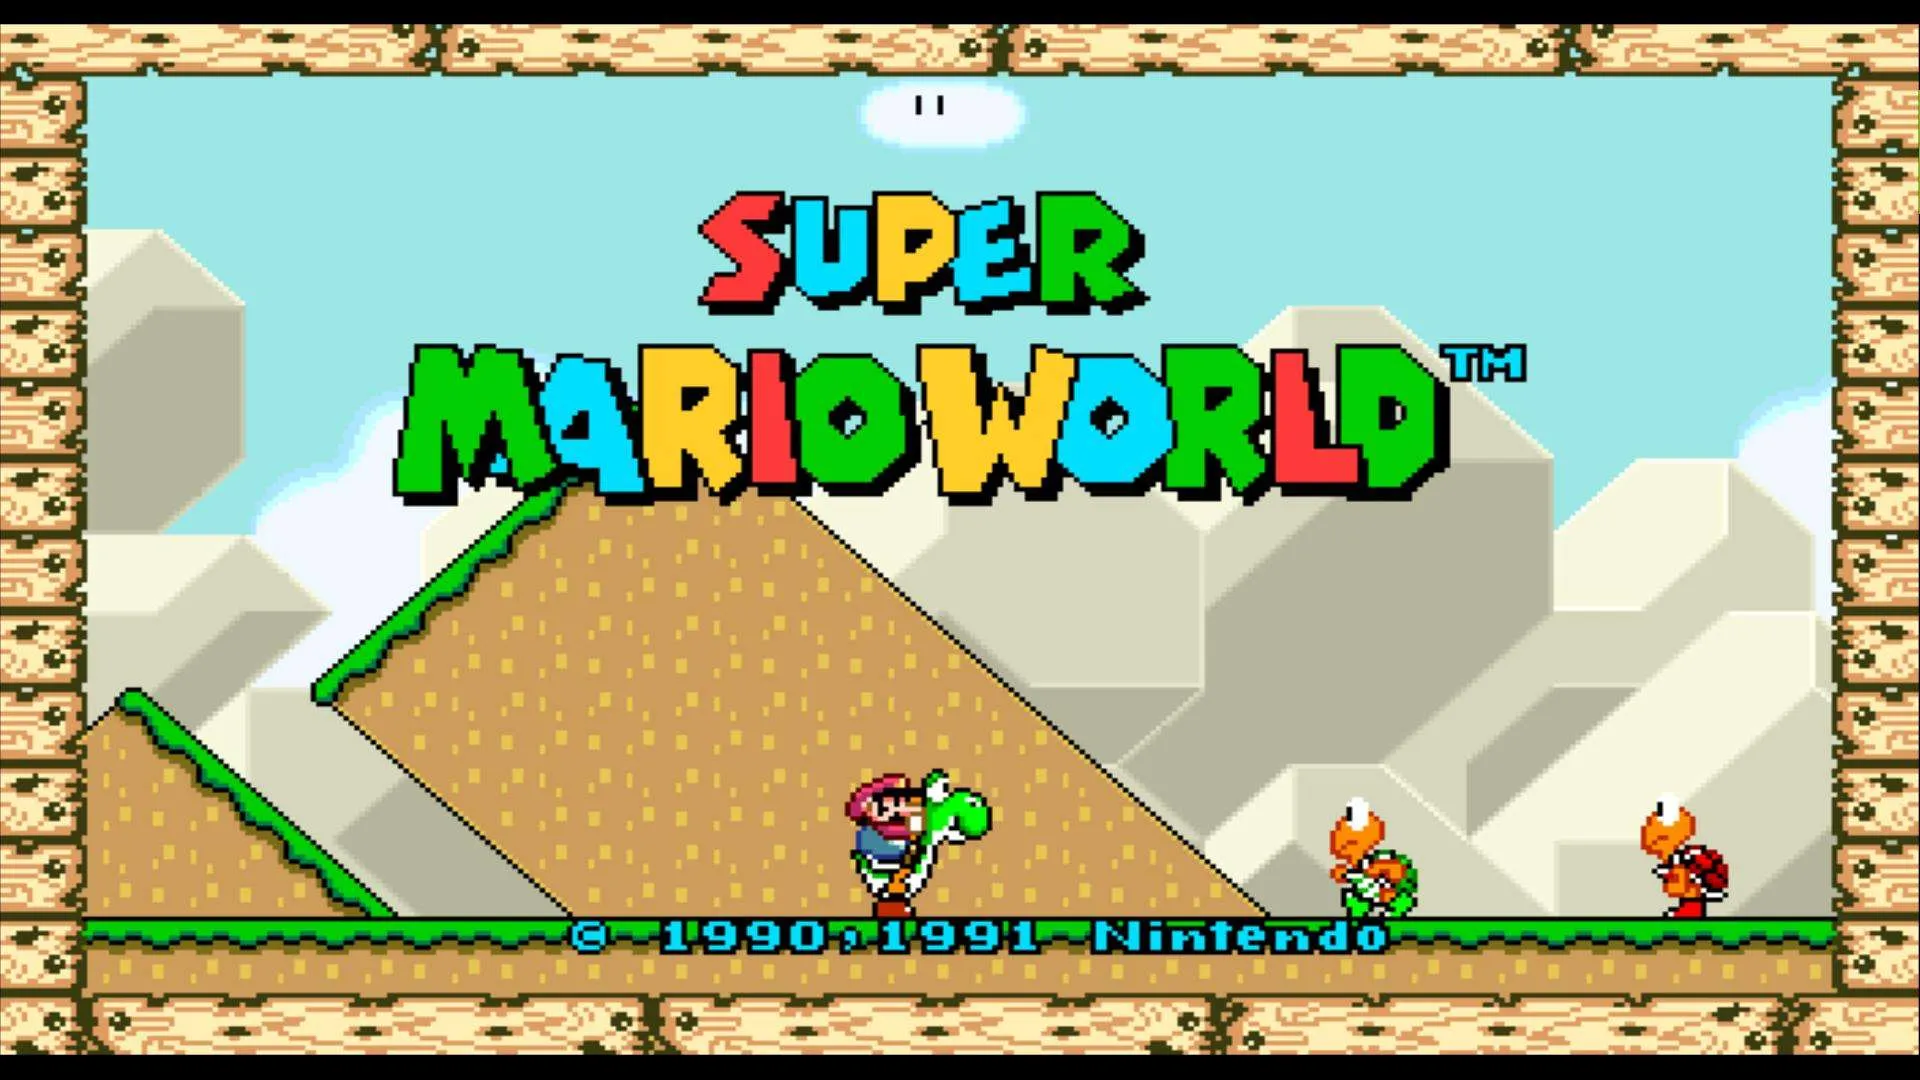 What made Super Mario World so good